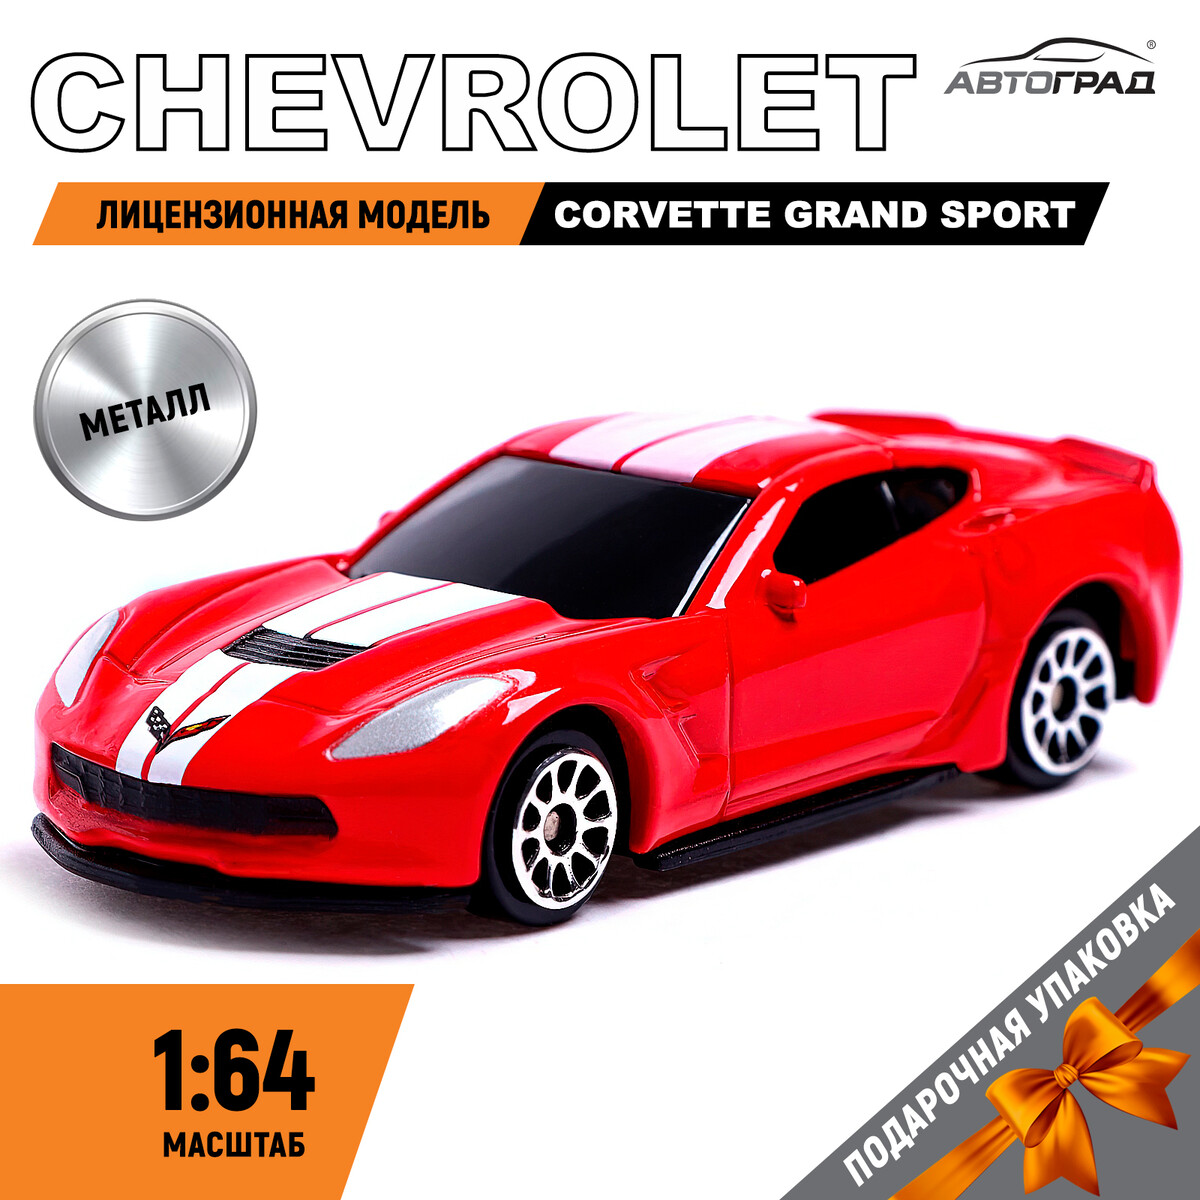 Машина металлическая chevrolet corvette grand sport, 1:64, цвет красный машина металлическая chevrolet corvette c6 r 1 64 желтый